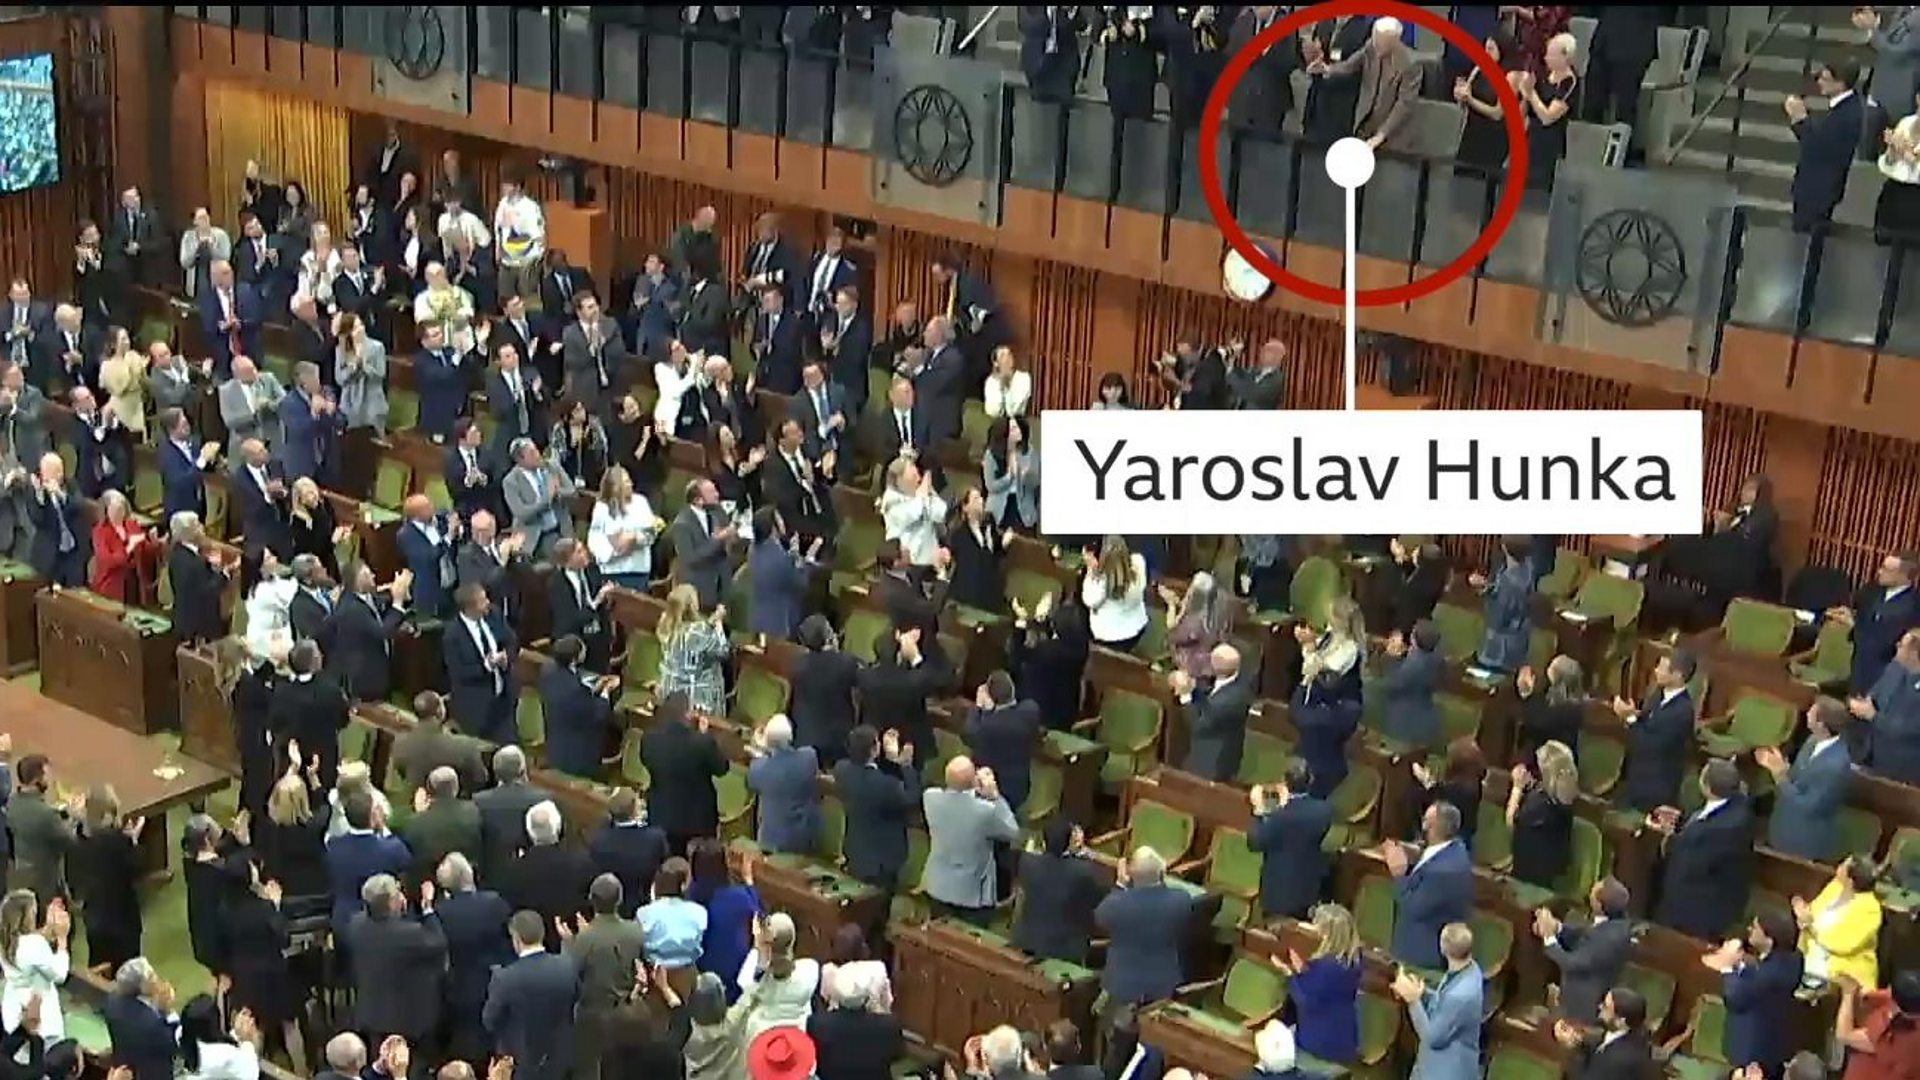 The moment Canadian lawmakers celebrate Ukrainian Nazi